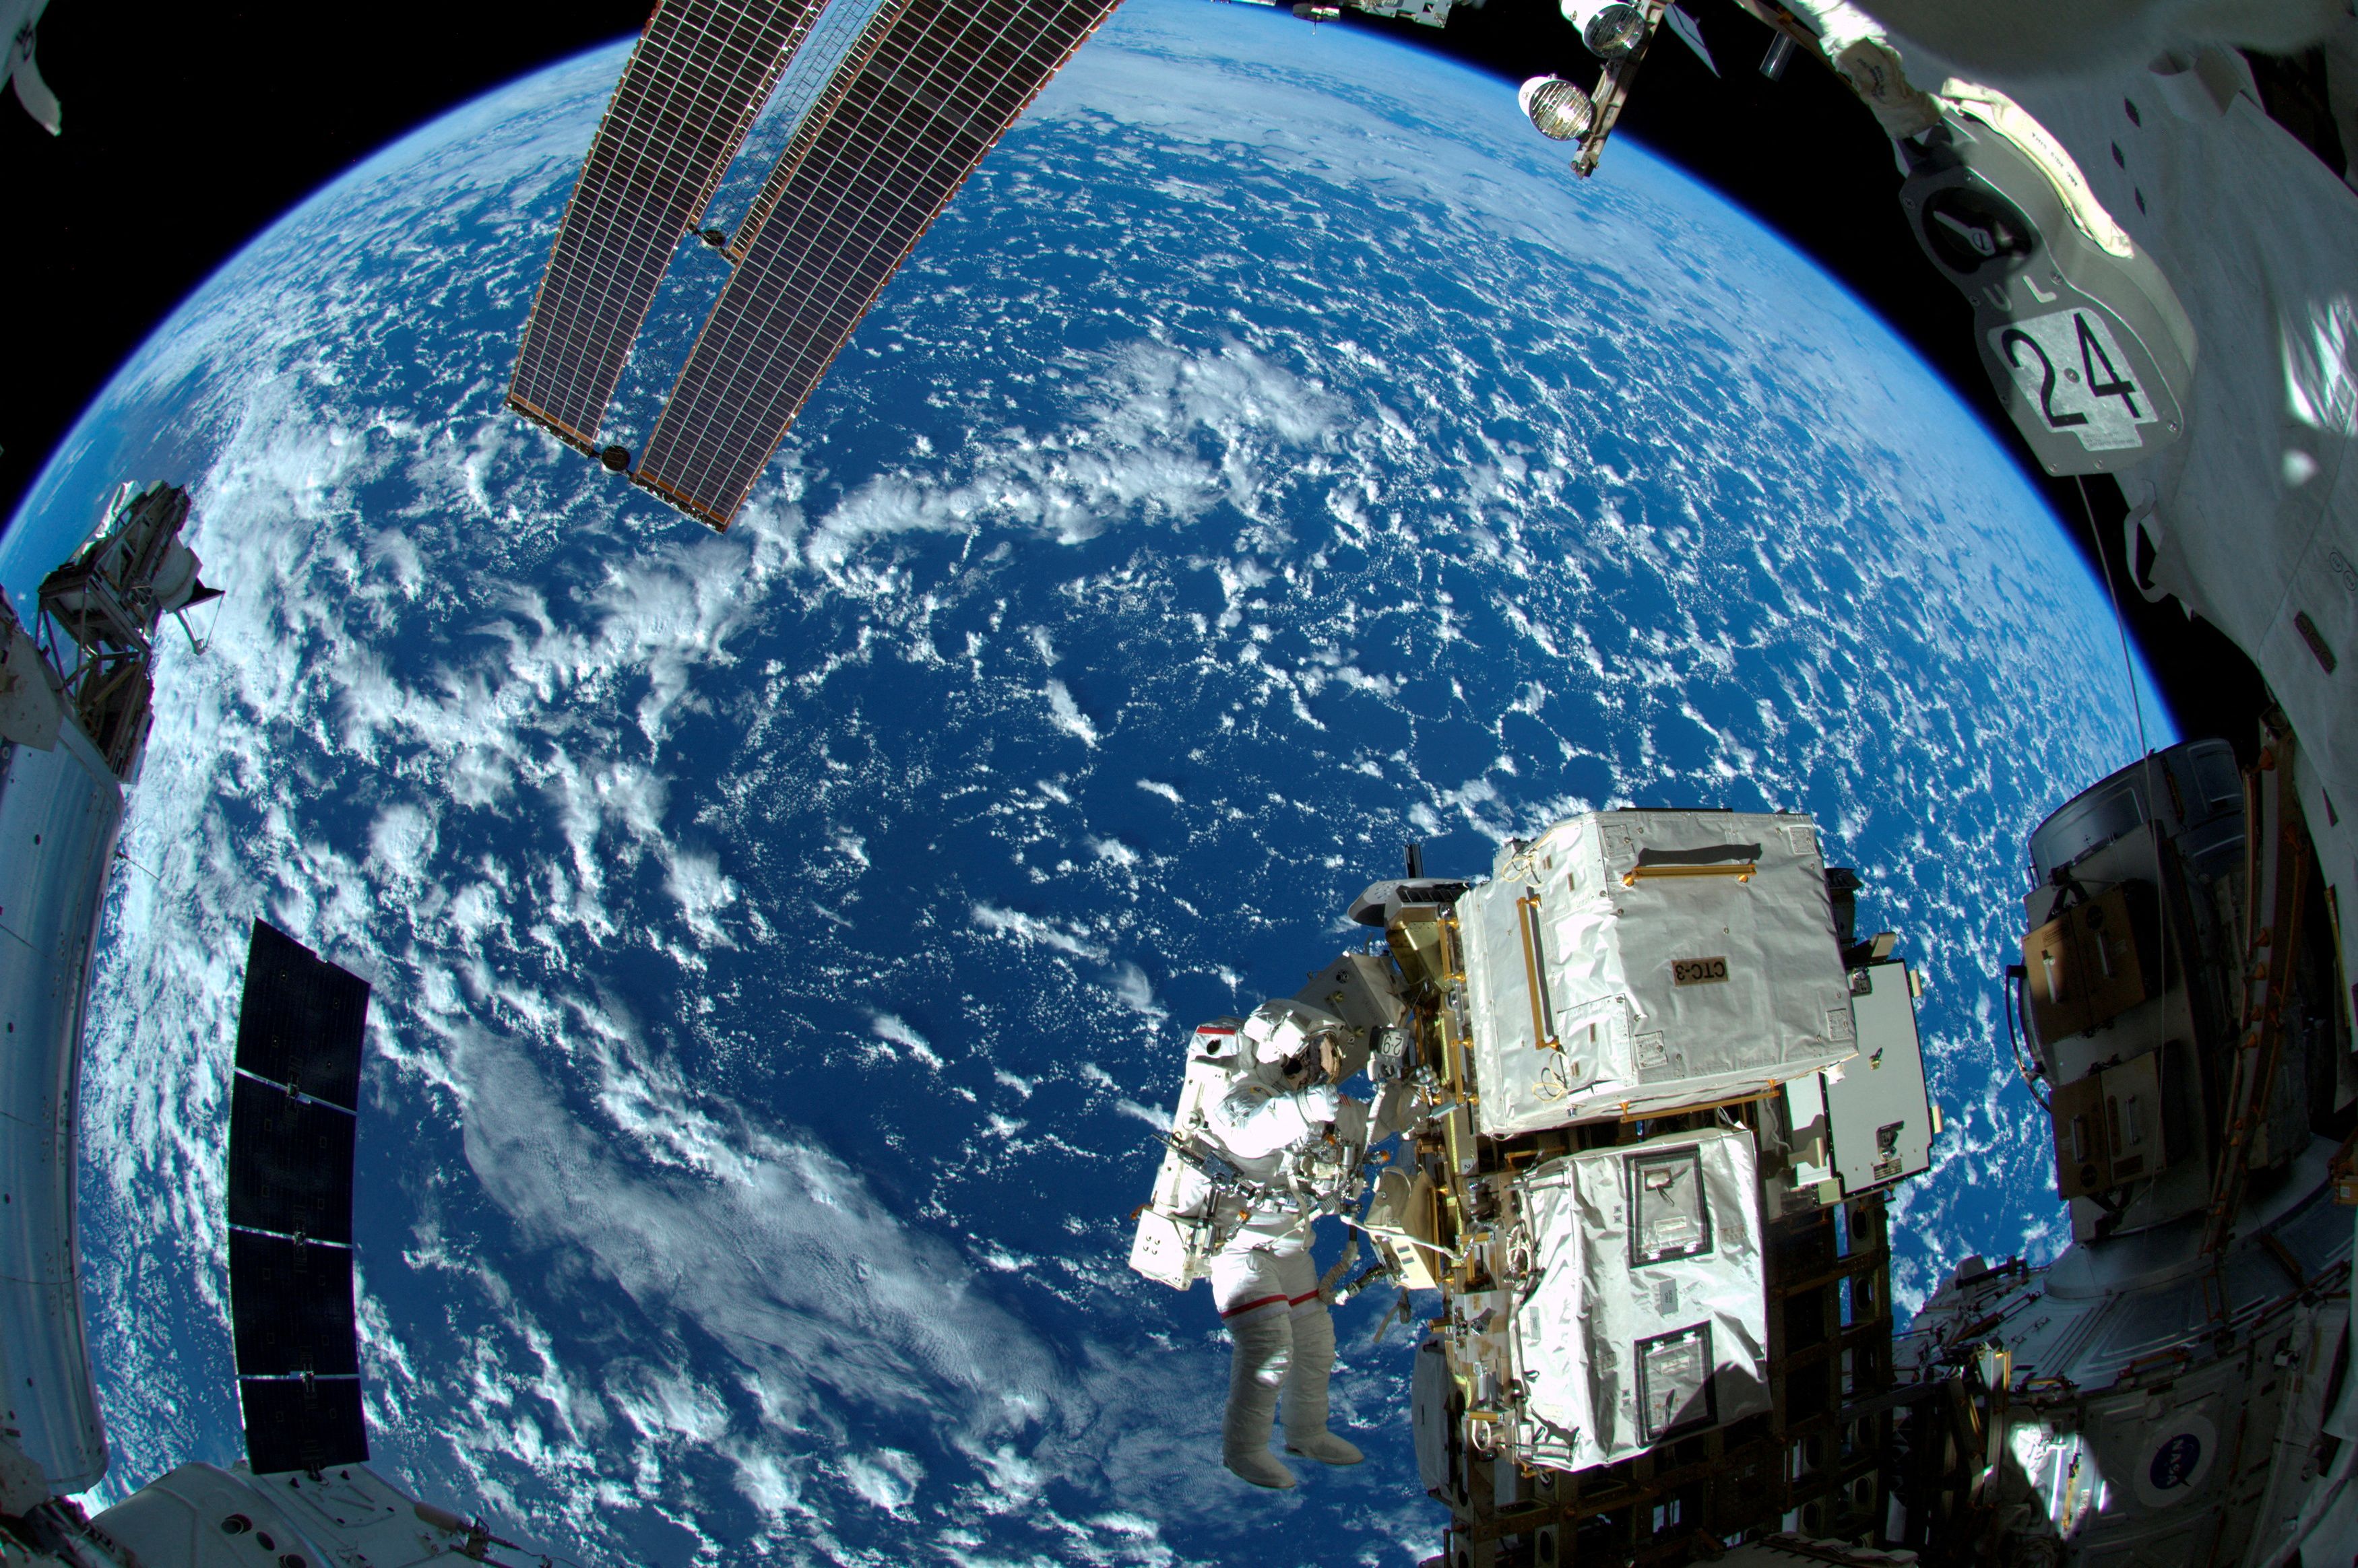 NASA astronaut Reid Wiseman works outside the International Space Station